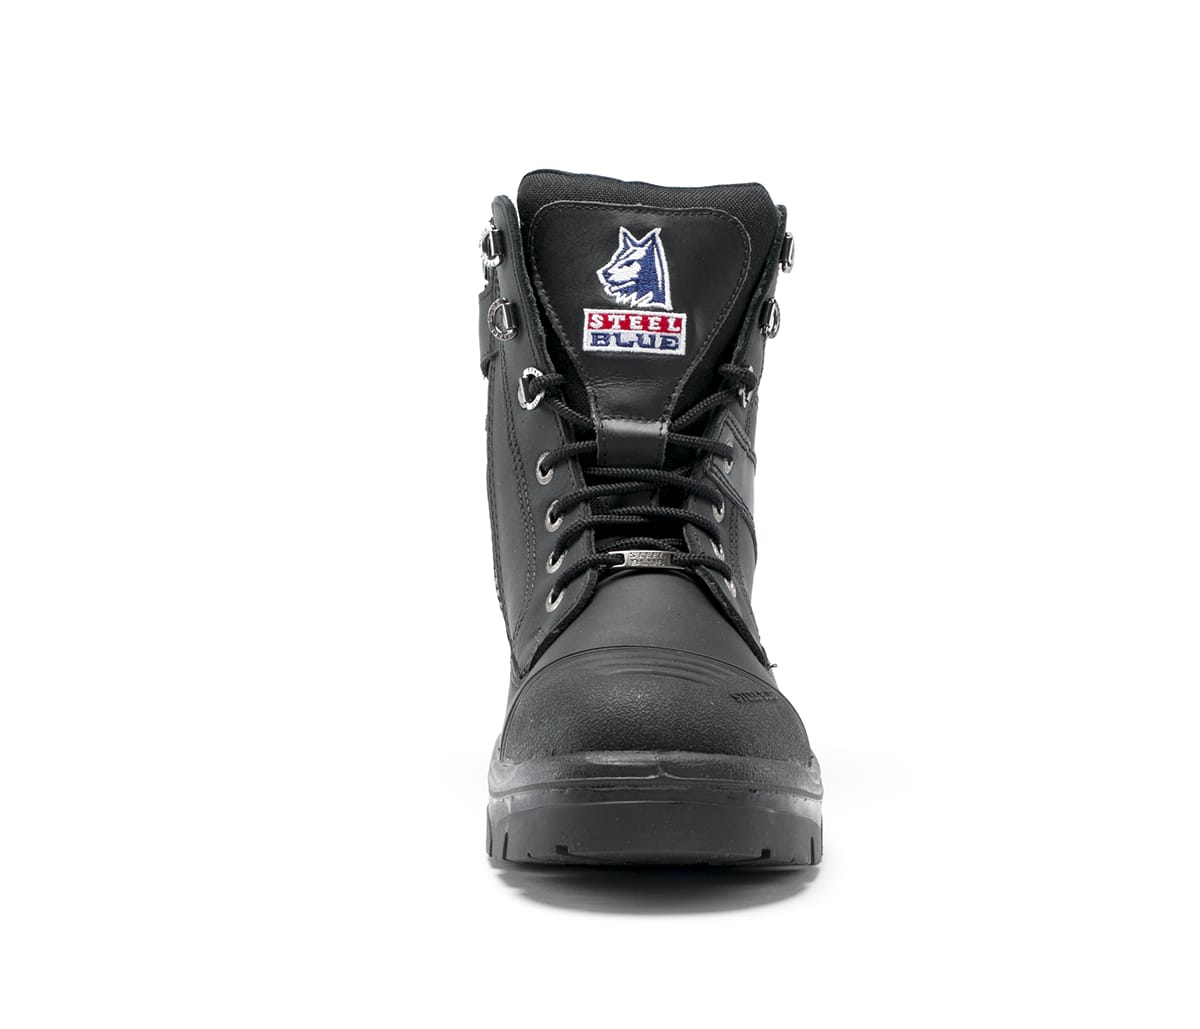 Southern Cross® Zip Work Boot - Black